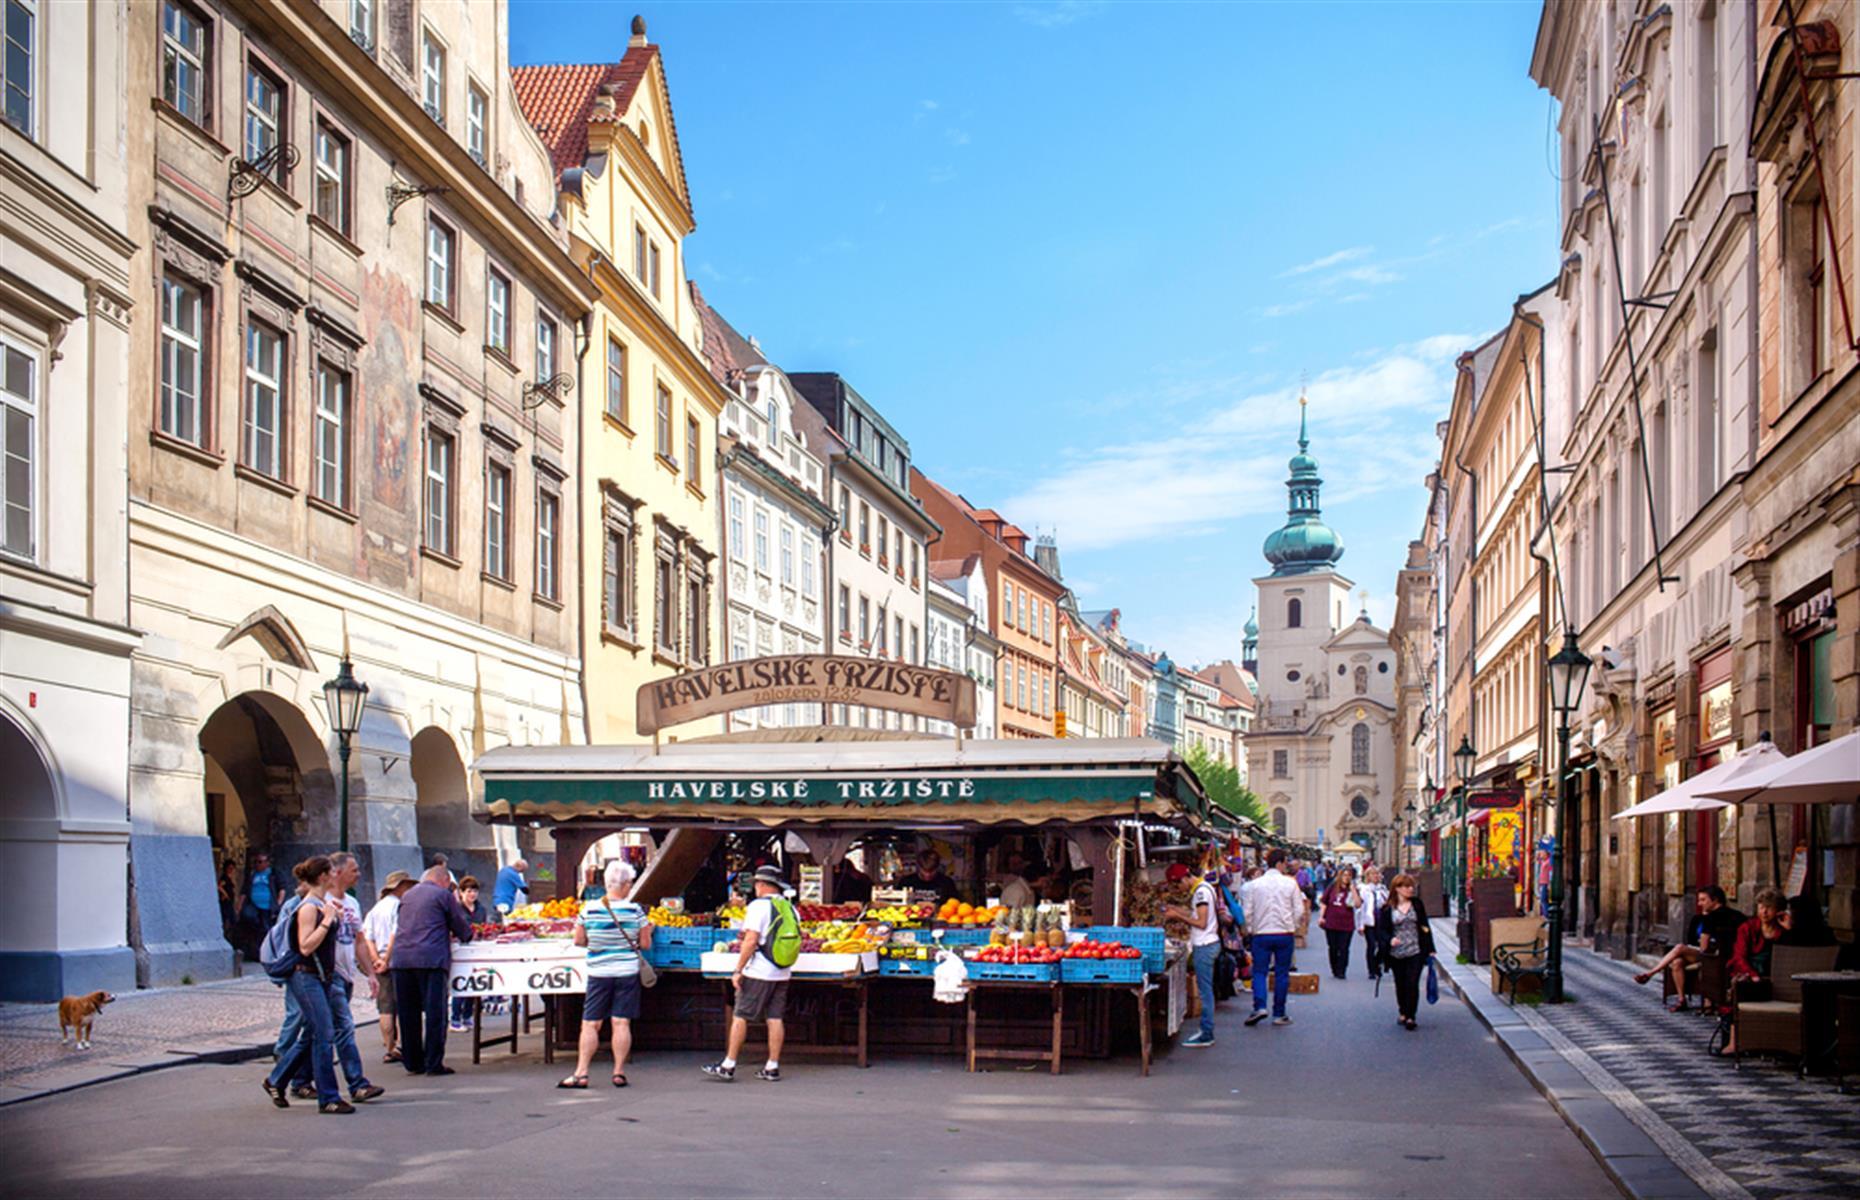 Czech Republic: highest tax rate of 22%